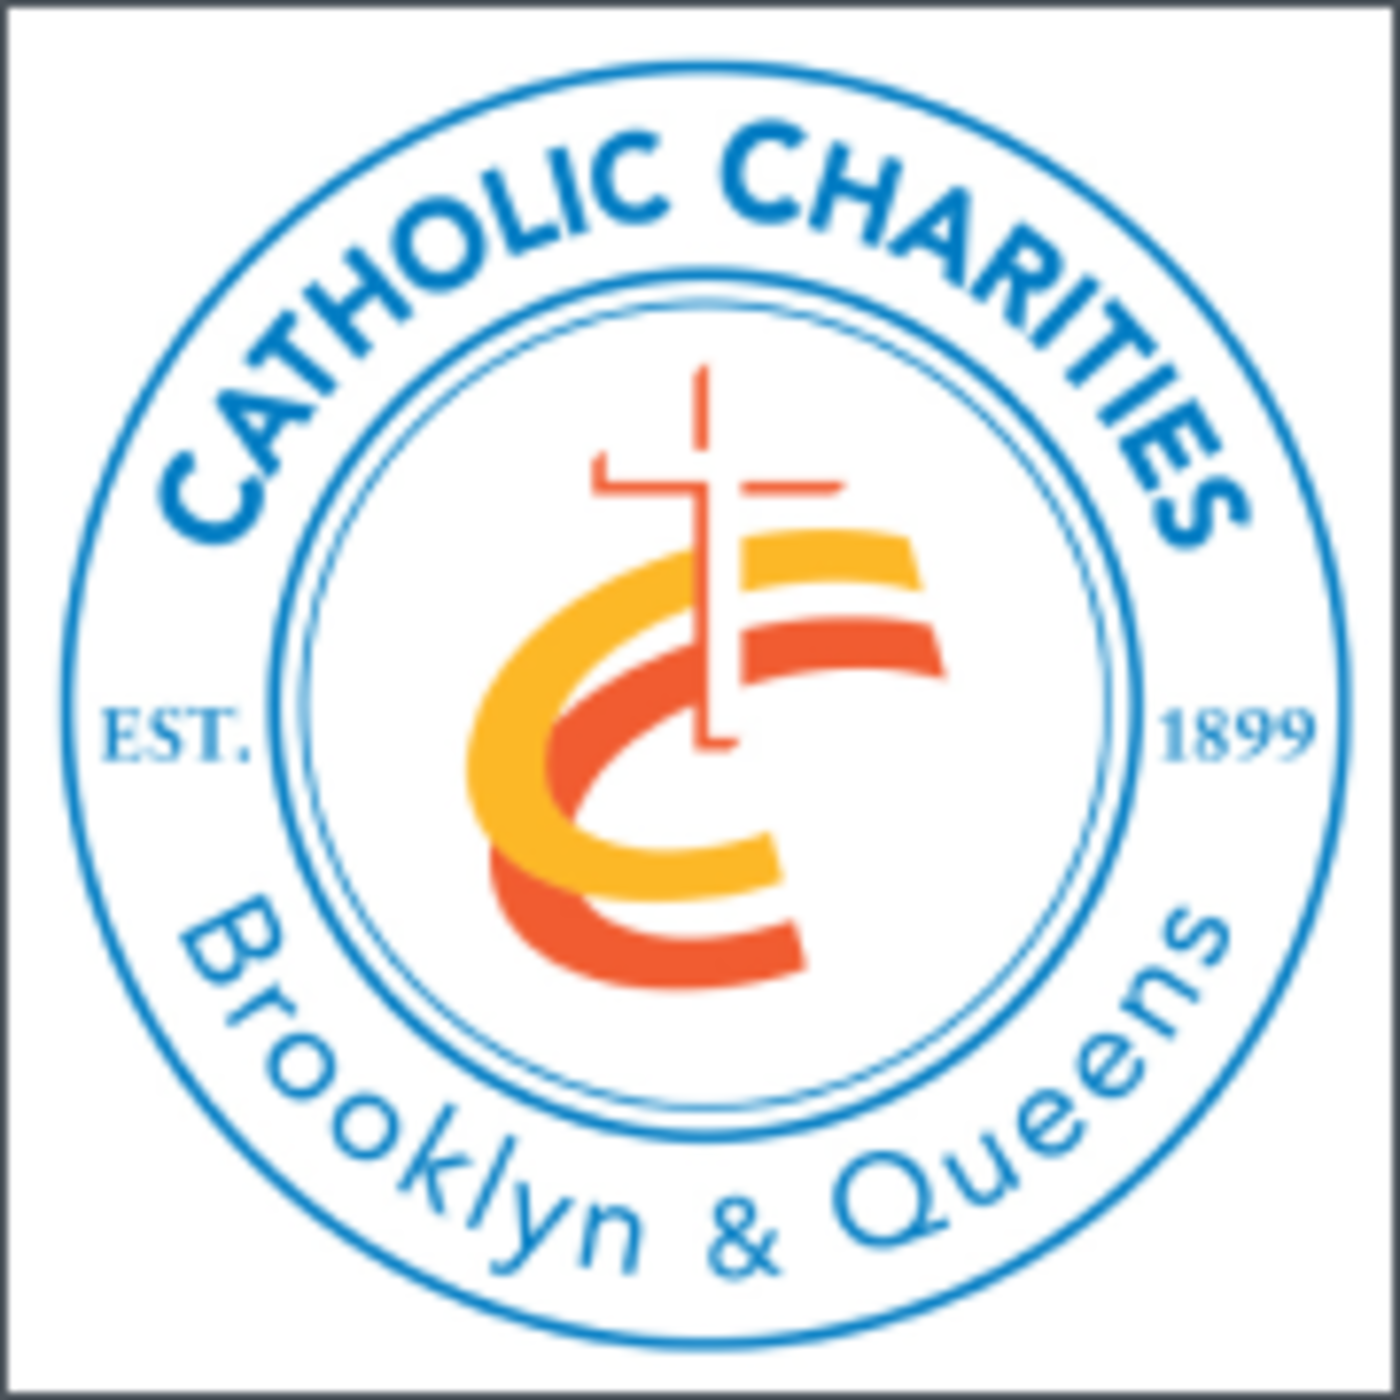 Catholic Charities of Brooklyn & Queens